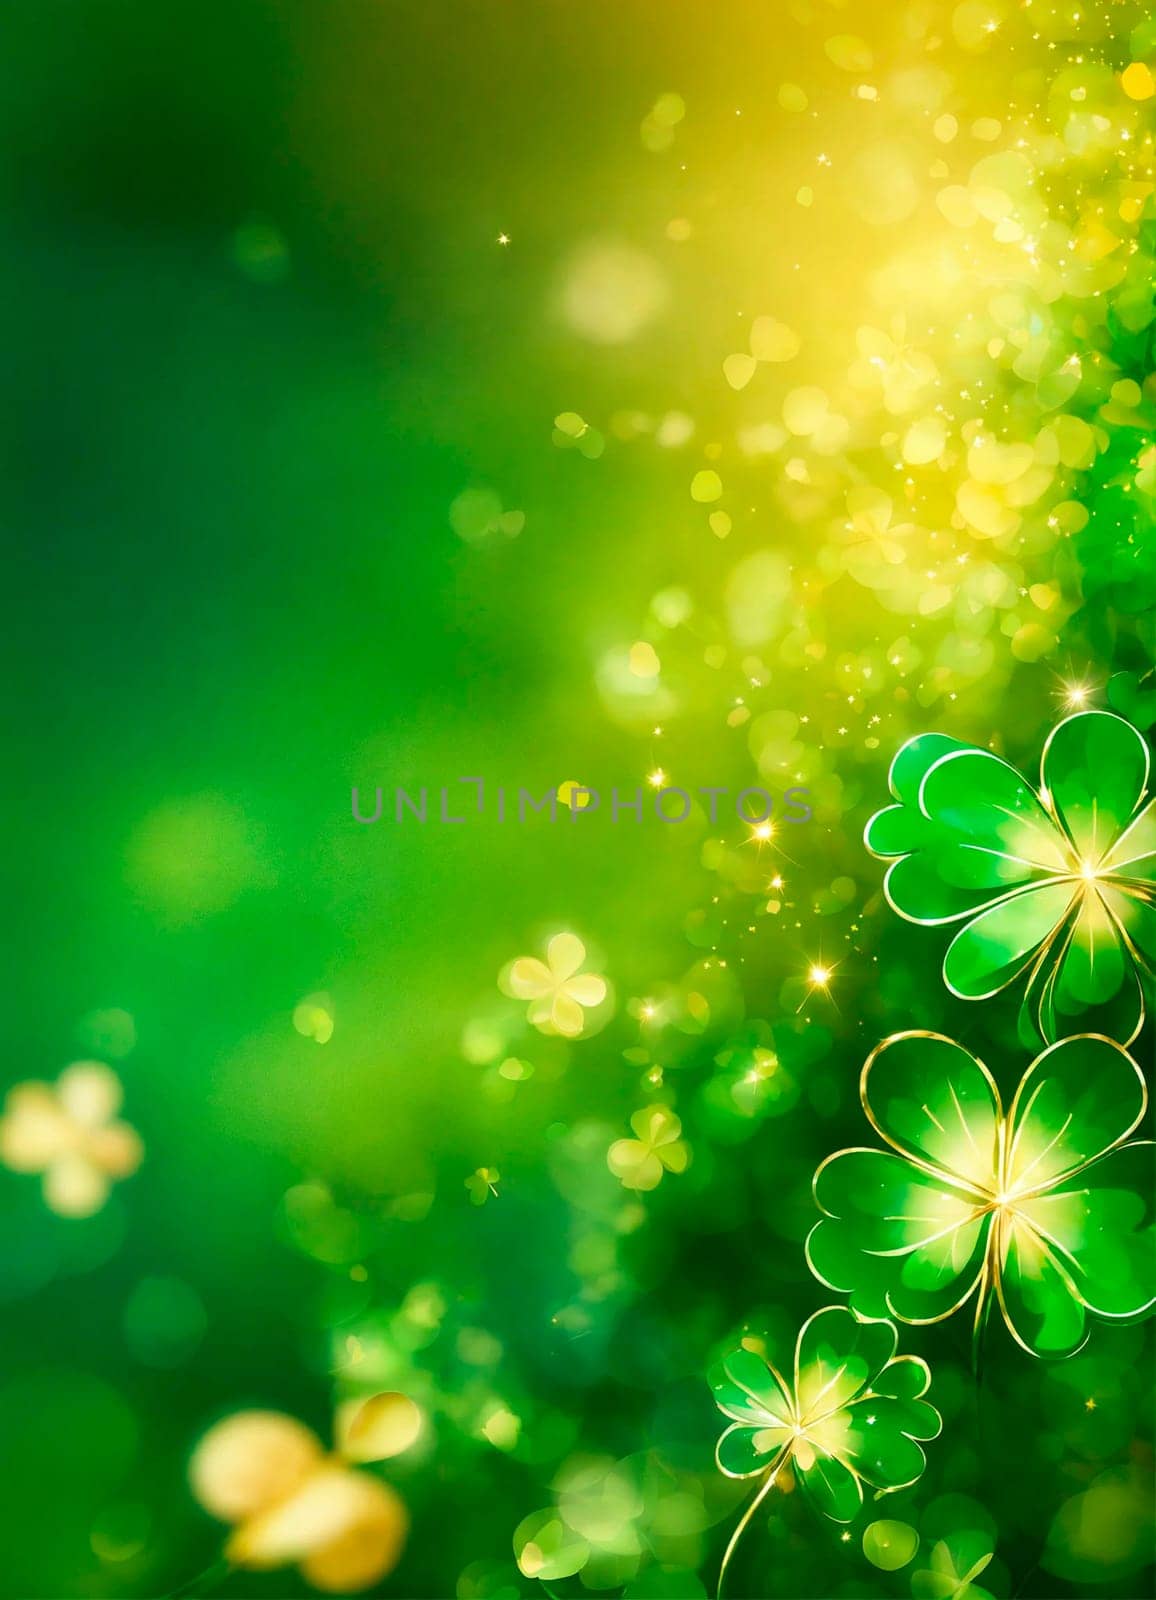 Clover leaf on a green background. Selective focus. by yanadjana